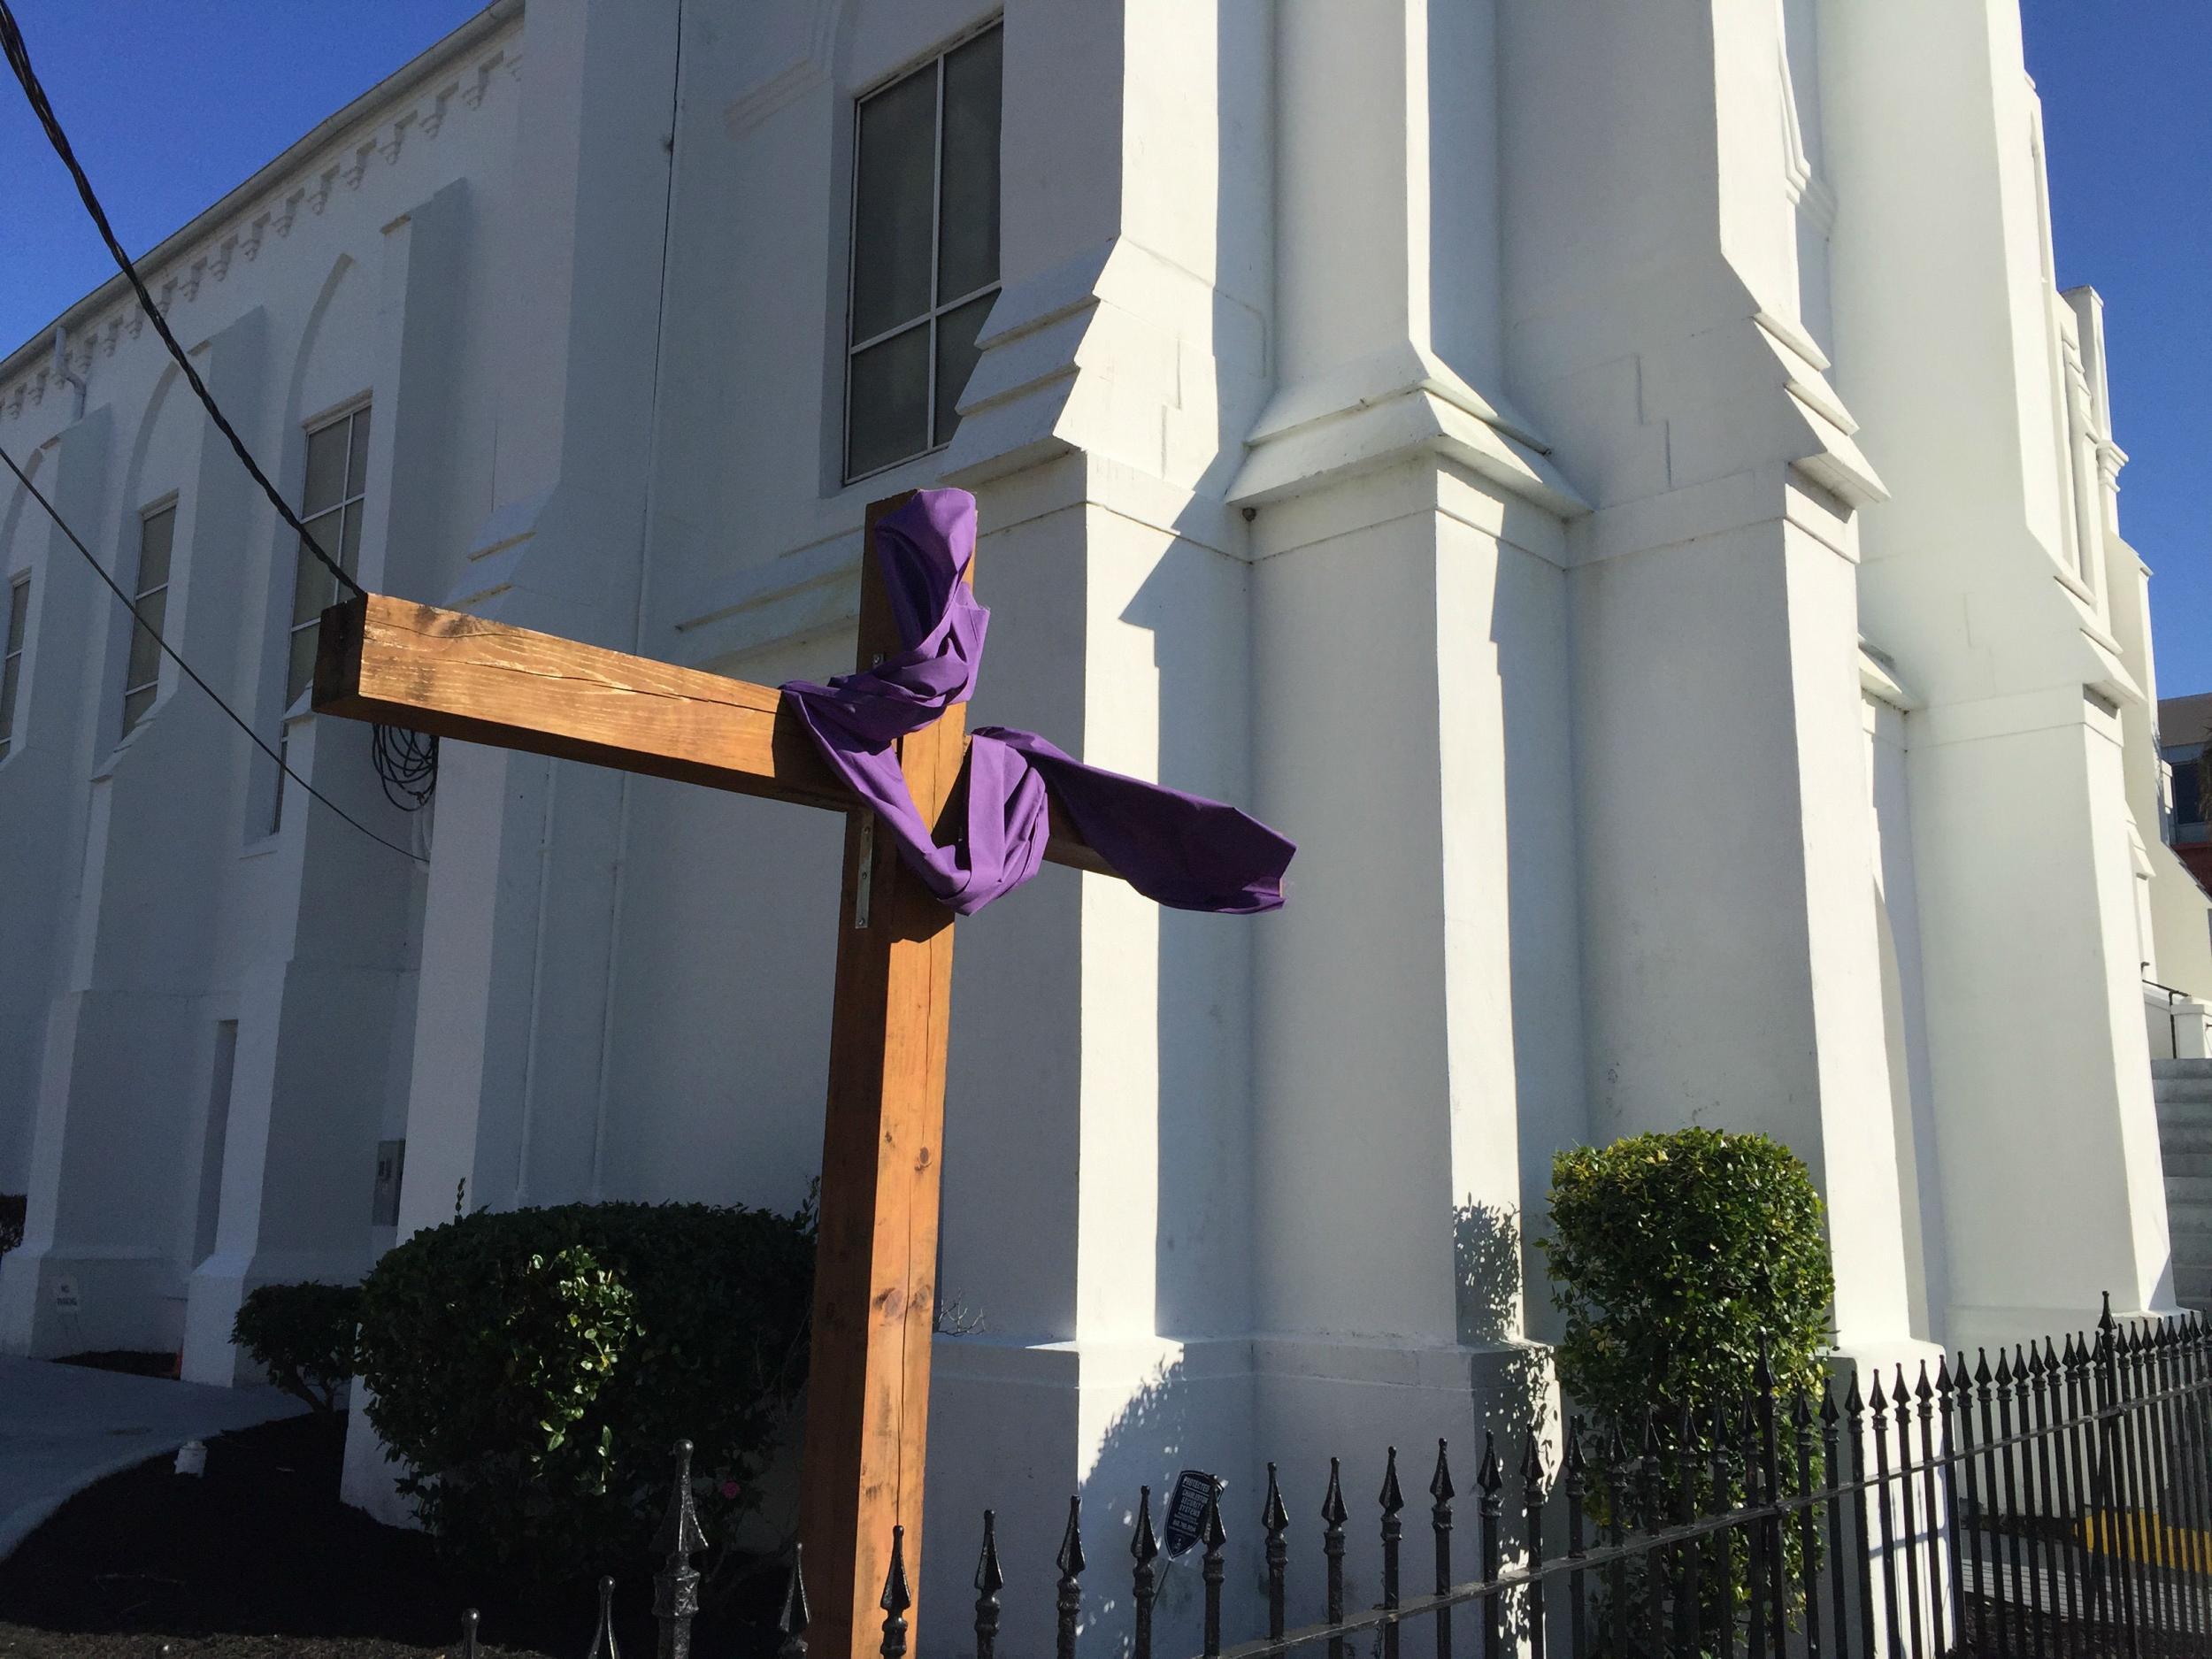 Nine people were killed in June 2015 inside Charleston's Emanuel African Methodist Episcopal Church (Andrew Buncombe )